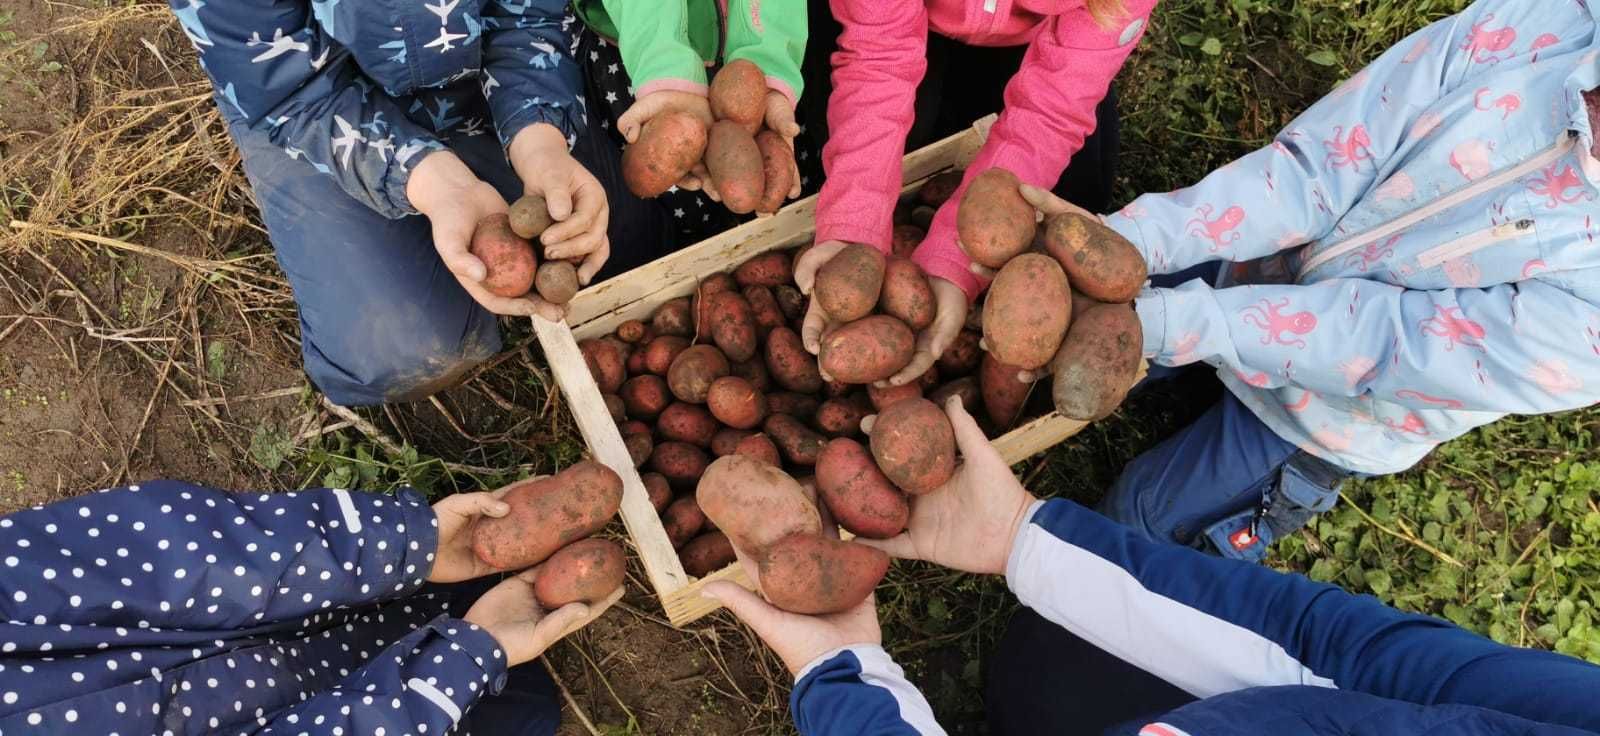 Kartoffelernte Kinderhände VS Patsch.jpg